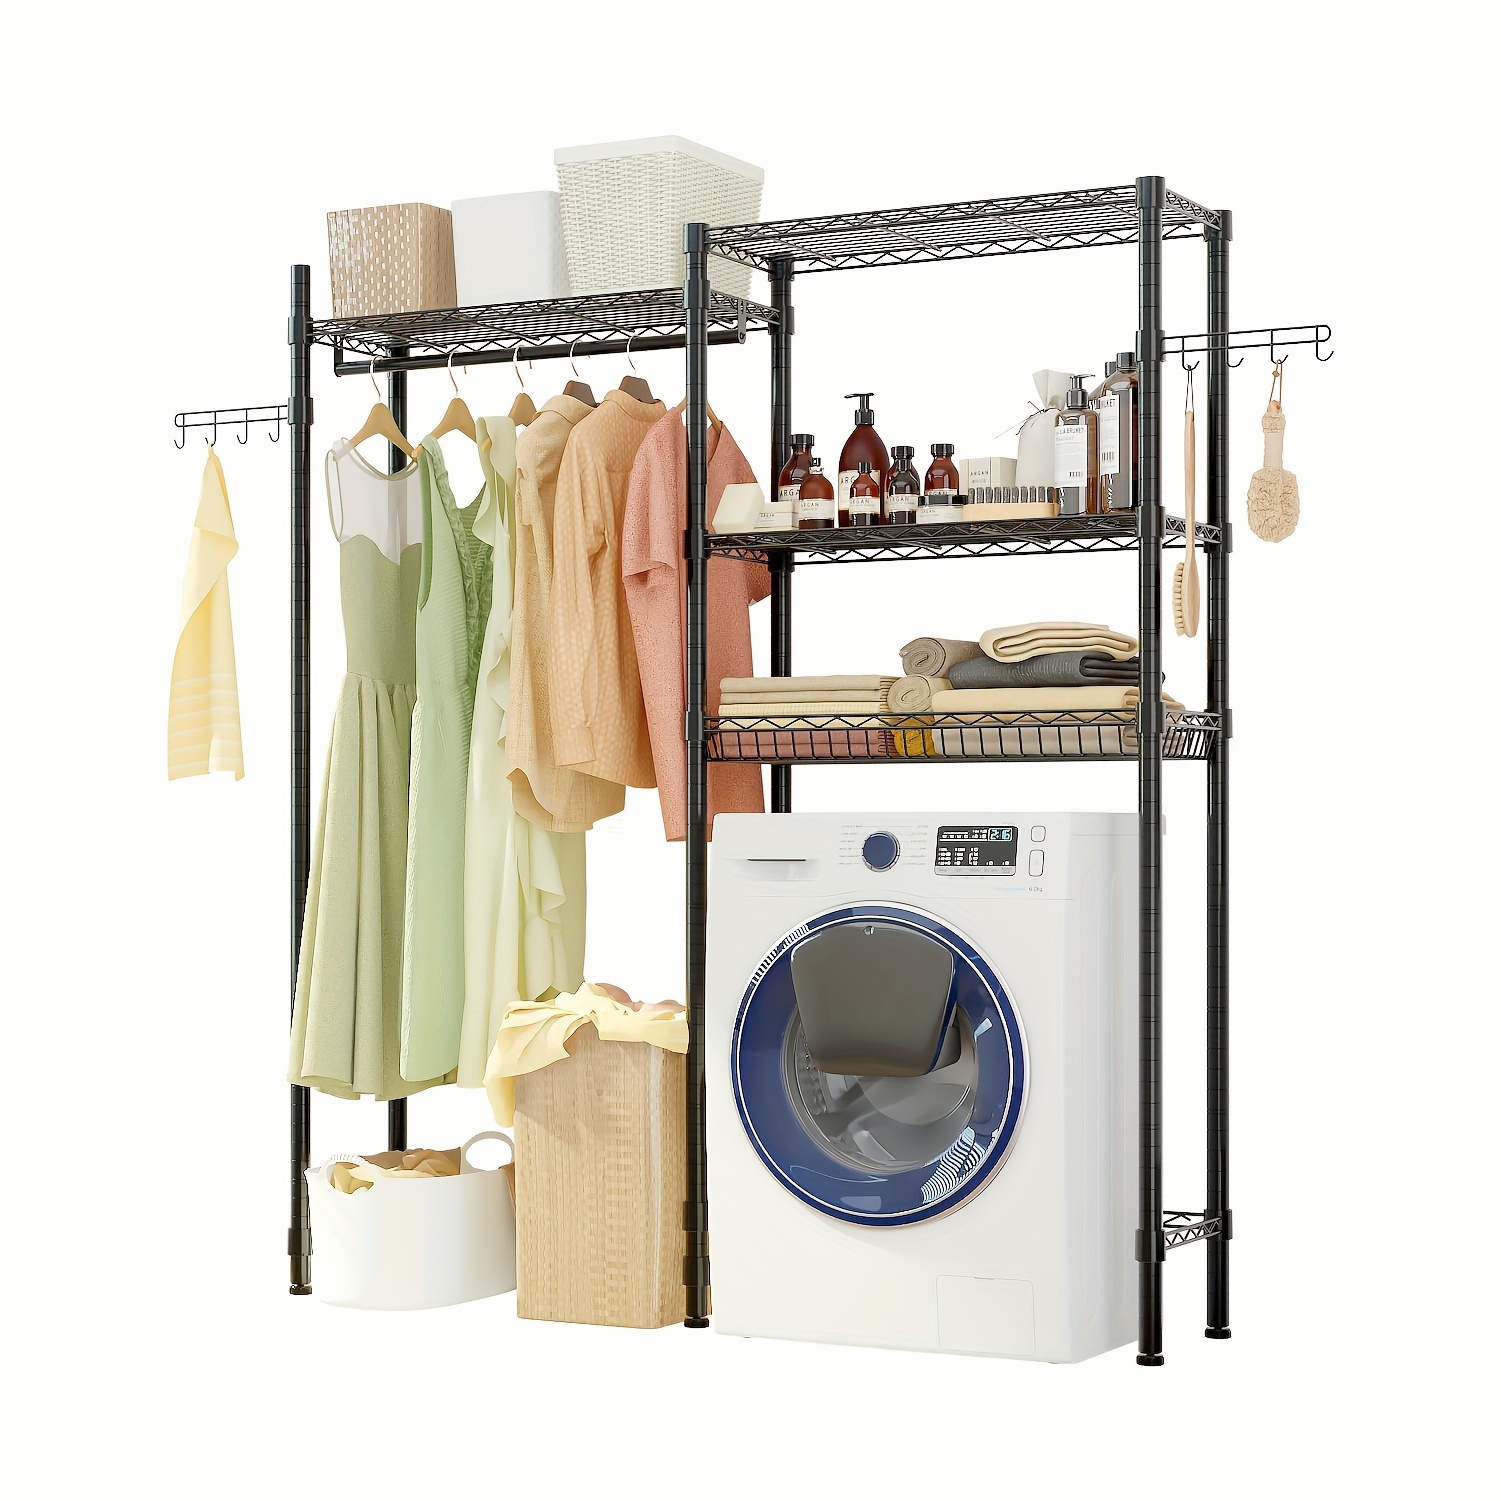 

1pc Ubesgoo The Washer And Dryer Storage Shelf Closet Organizer, Metal Garment Rack, Portable Clothes Hanger Home Shelf